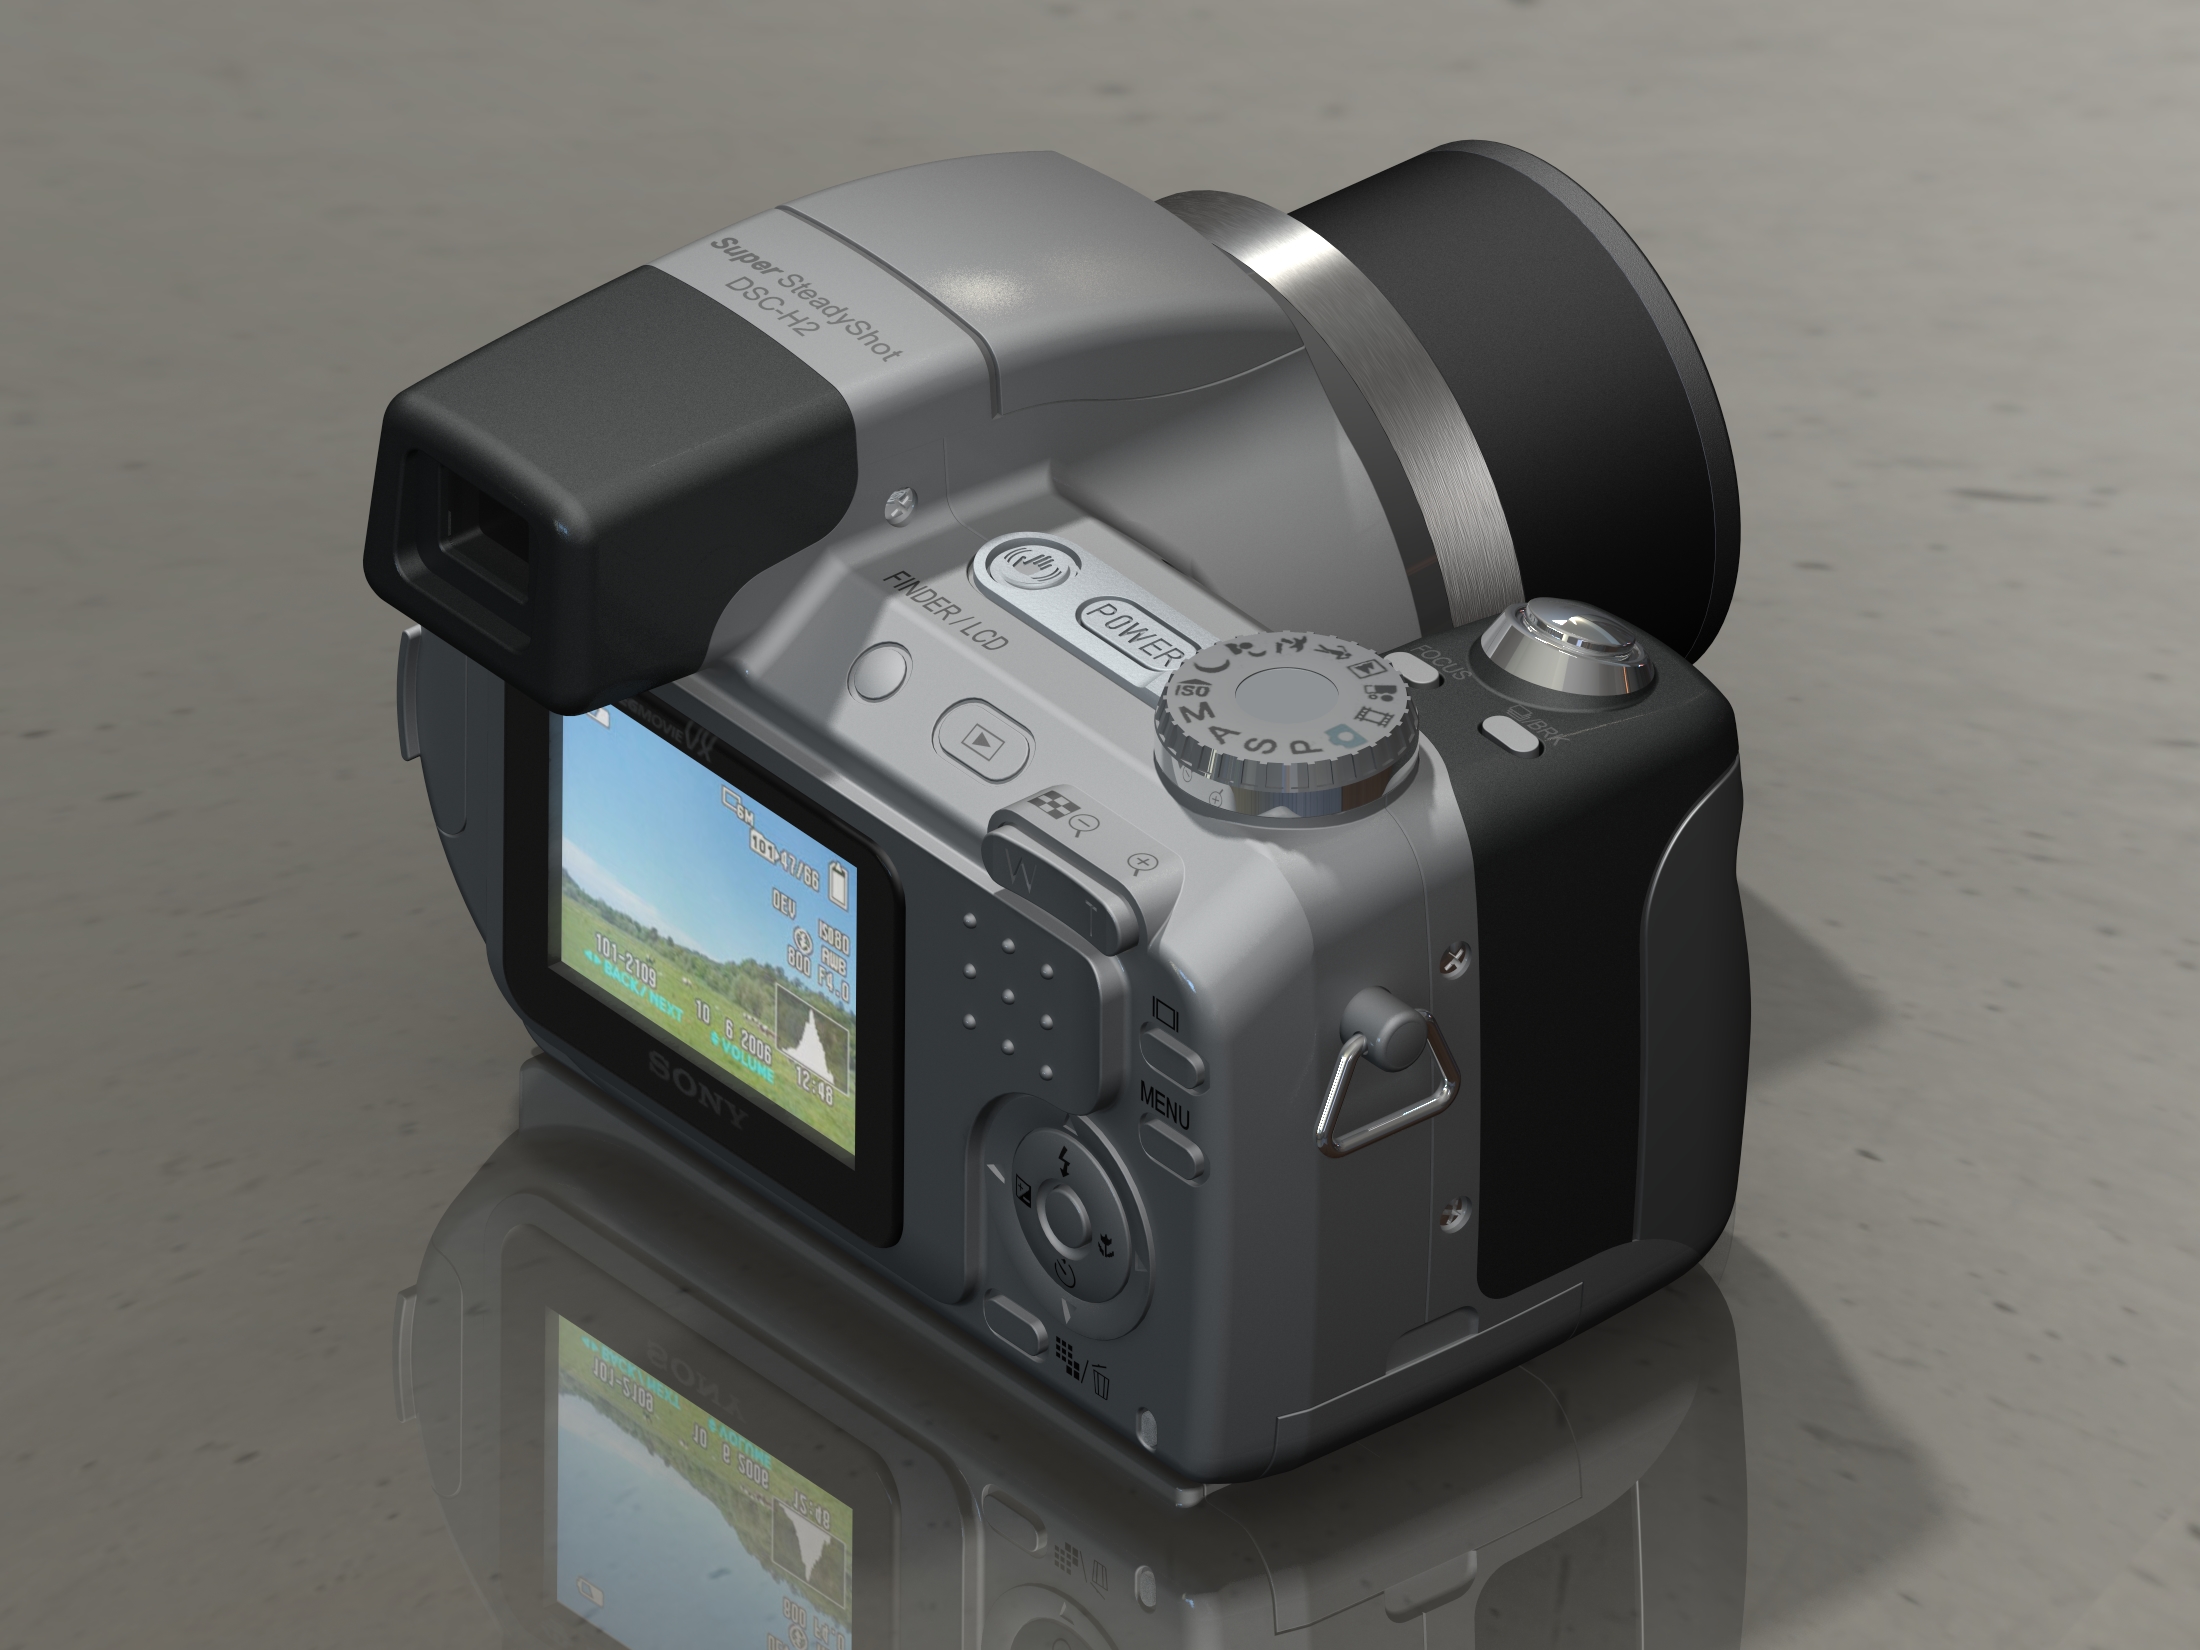 Sony索尼DSC-H2数码相机